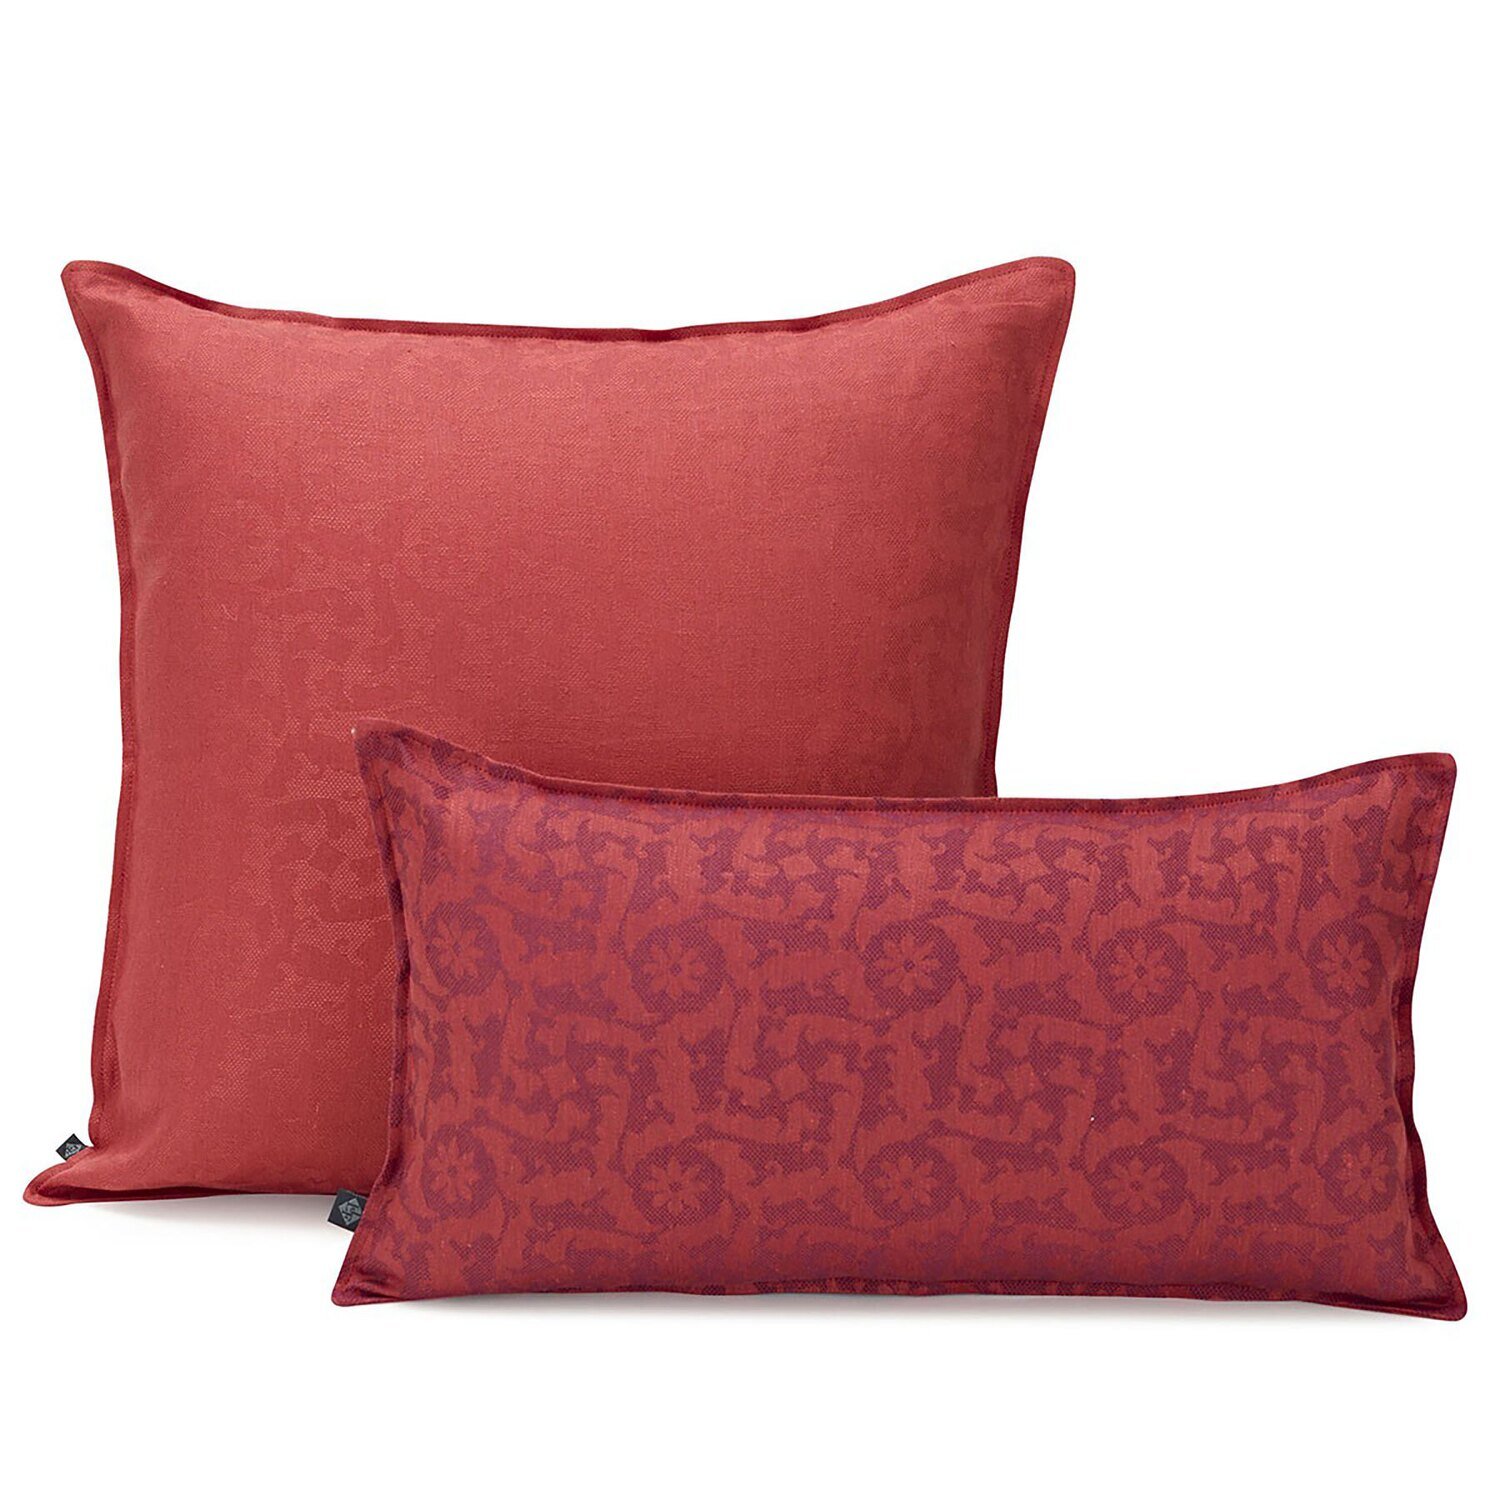 Le Jacquard Cushion Cover Ottomane Burgundy 50 x 50 100% Linen 26693